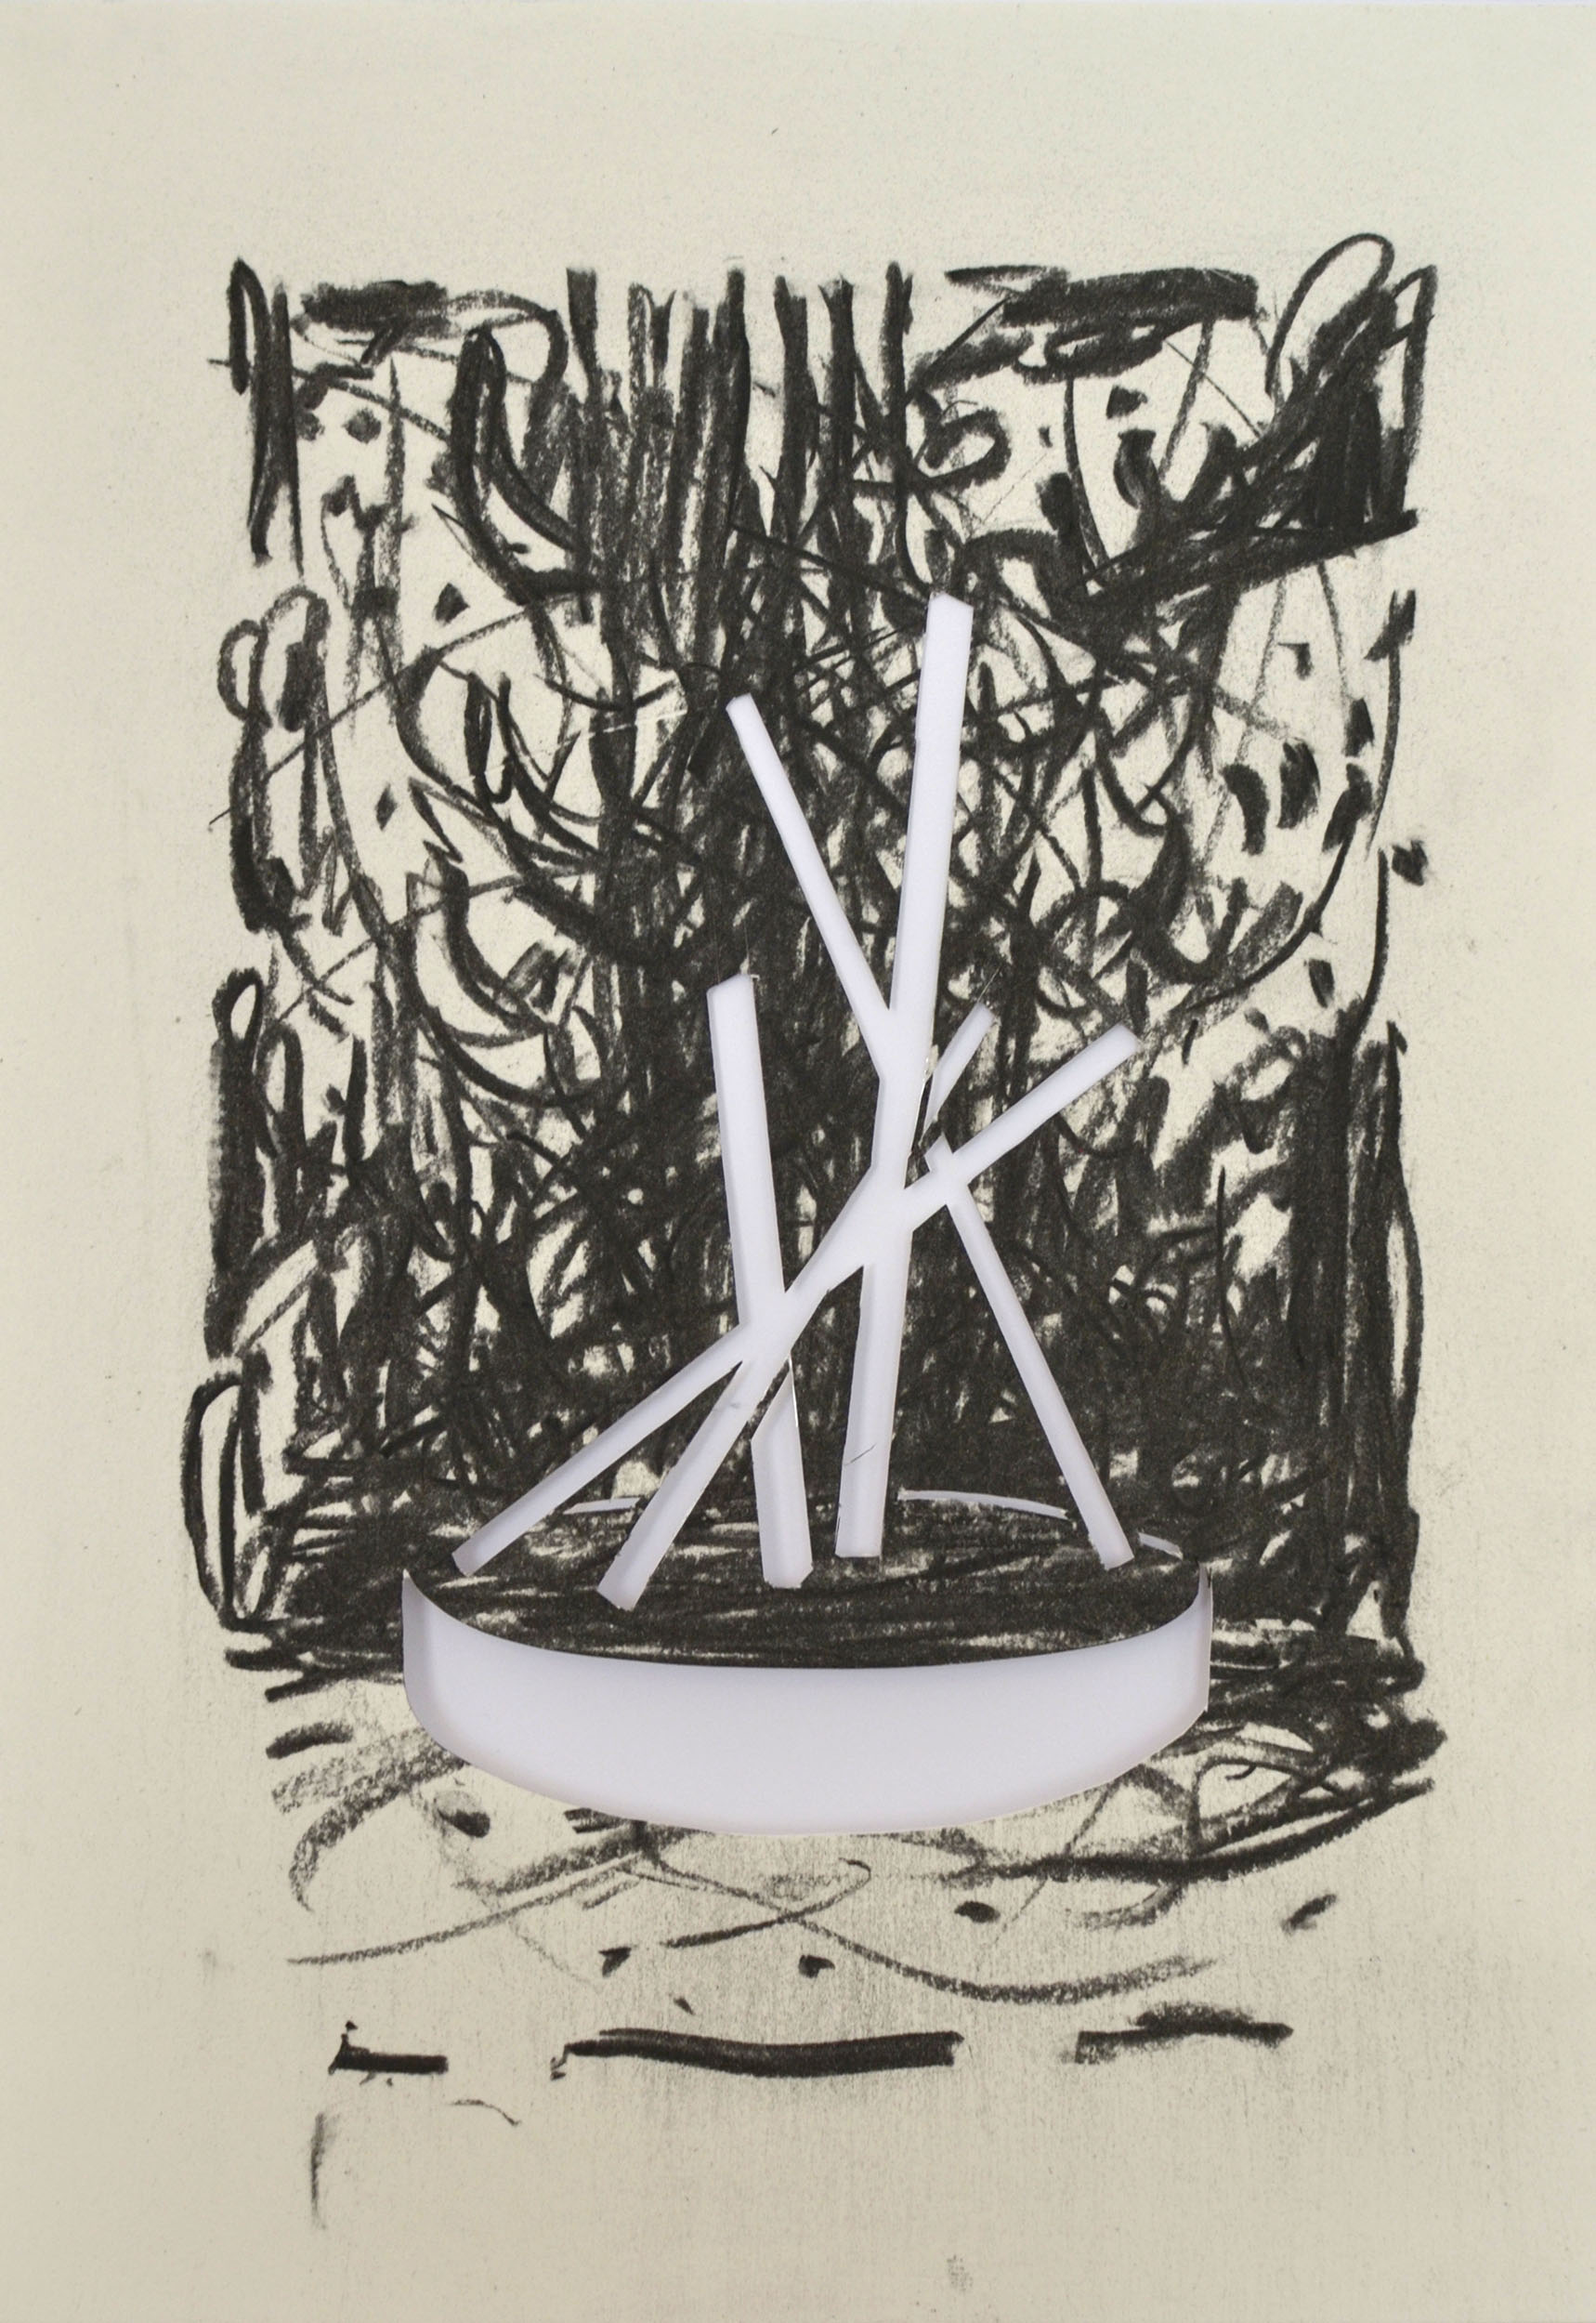   Moderniste IX   charcoal on paper 30 x 20 cm, 2017 